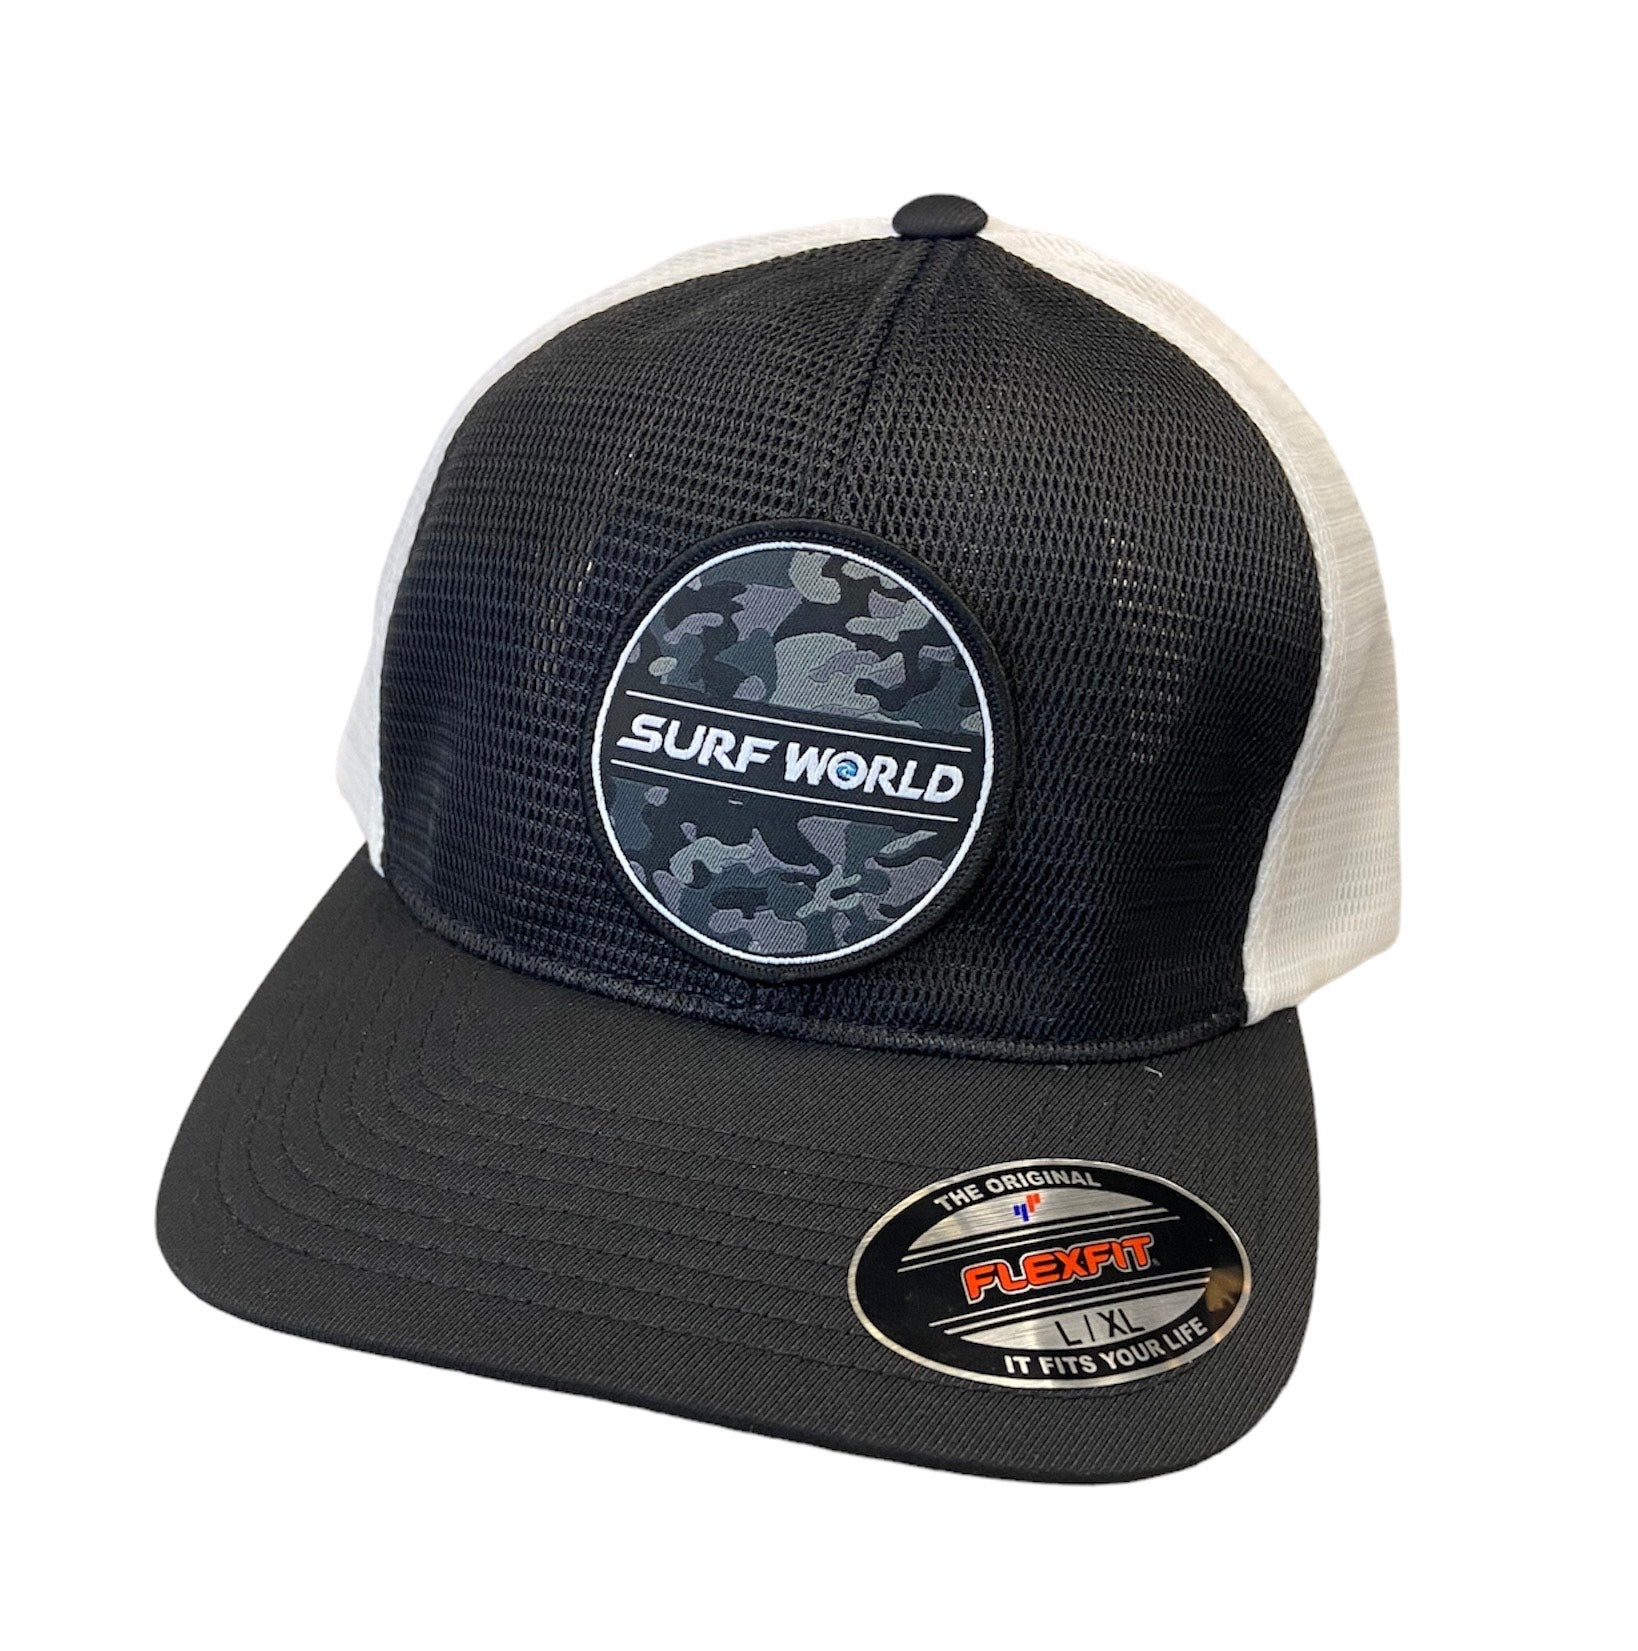 Surf World All Mesh Trucker Hat Hats Black White Camo L XL